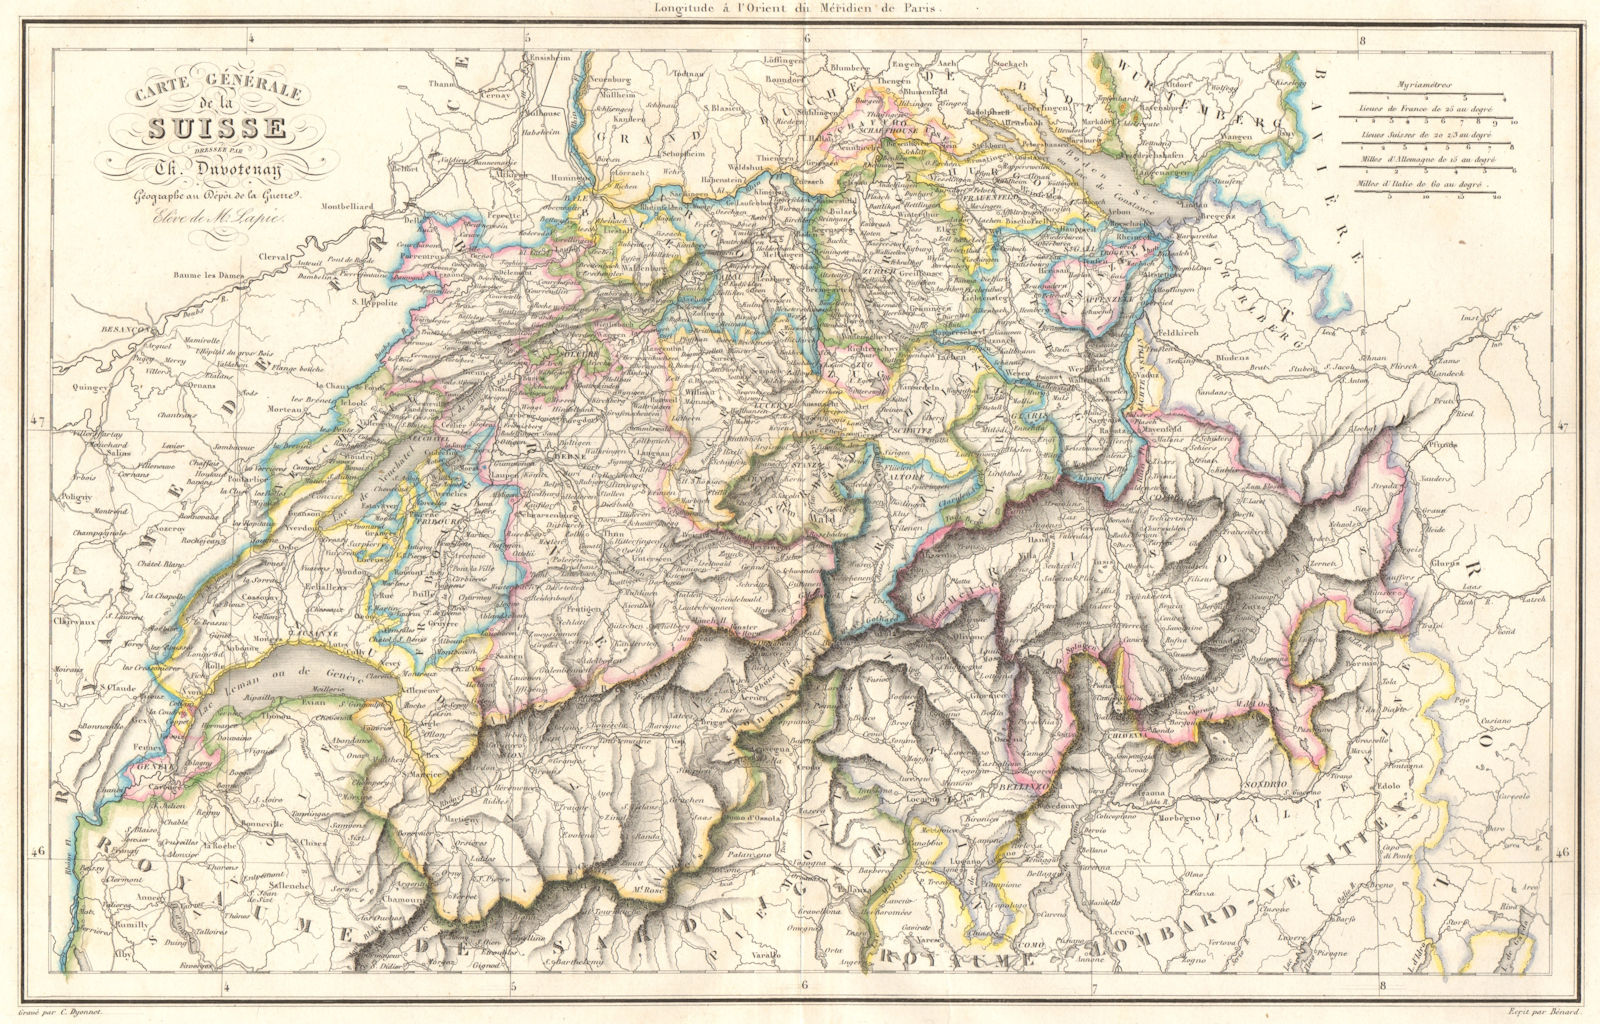 Carte Générale de la Suisse. Switzerland Schweiz Svizzera. DUVOTENAY 1837 map